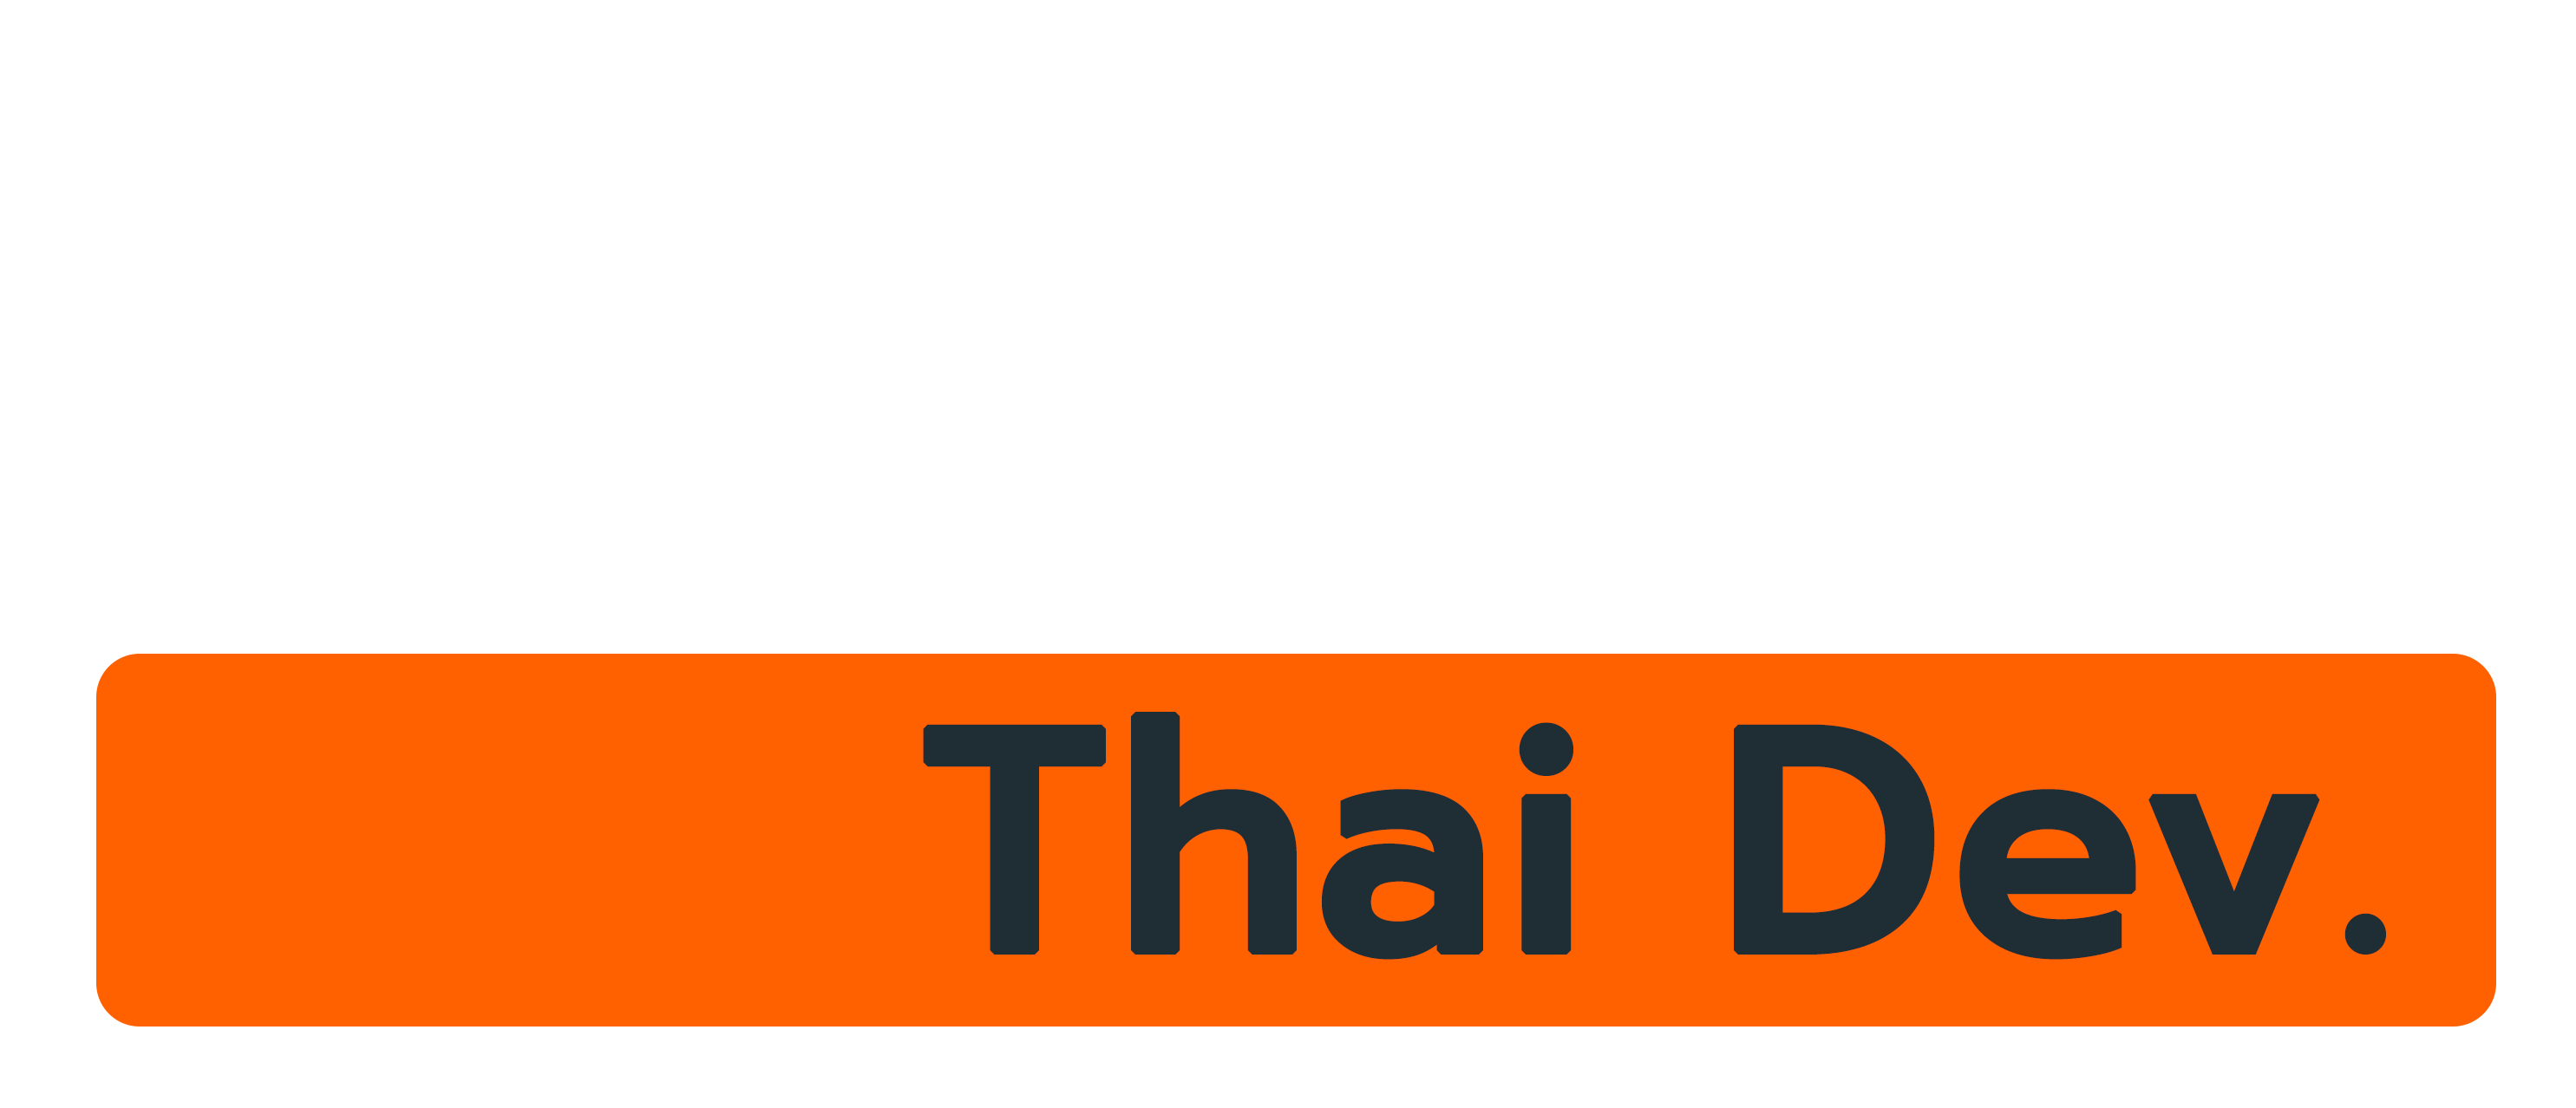 Appsheet Thai Dev.